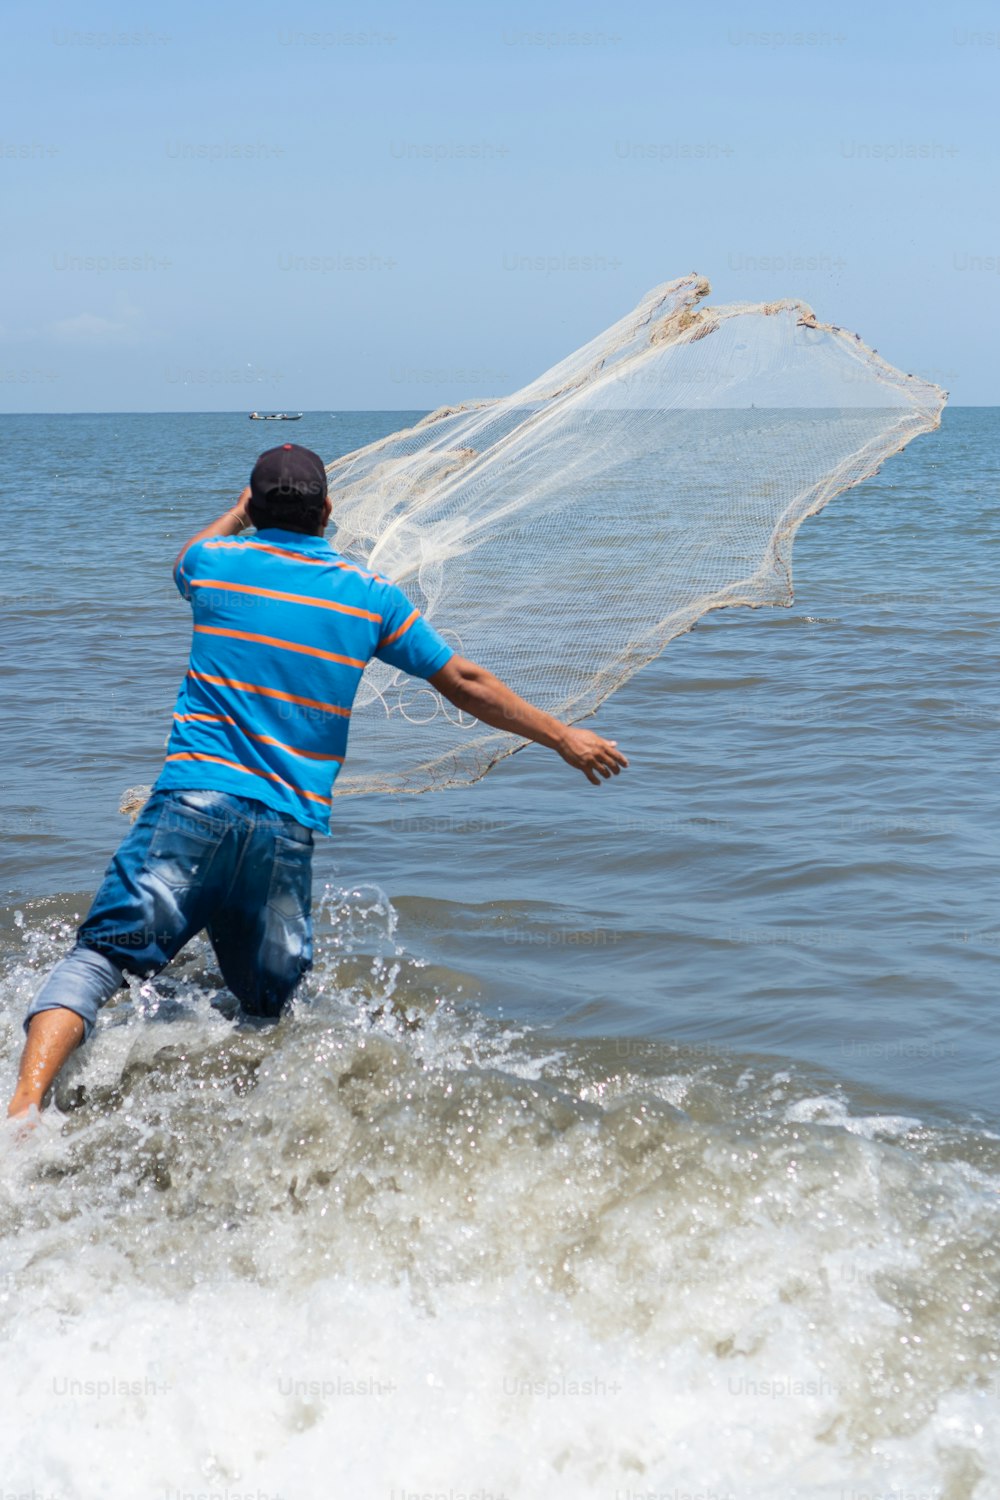 Fisher on the beach casting a fishing net photo – Fishing net Image on  Unsplash